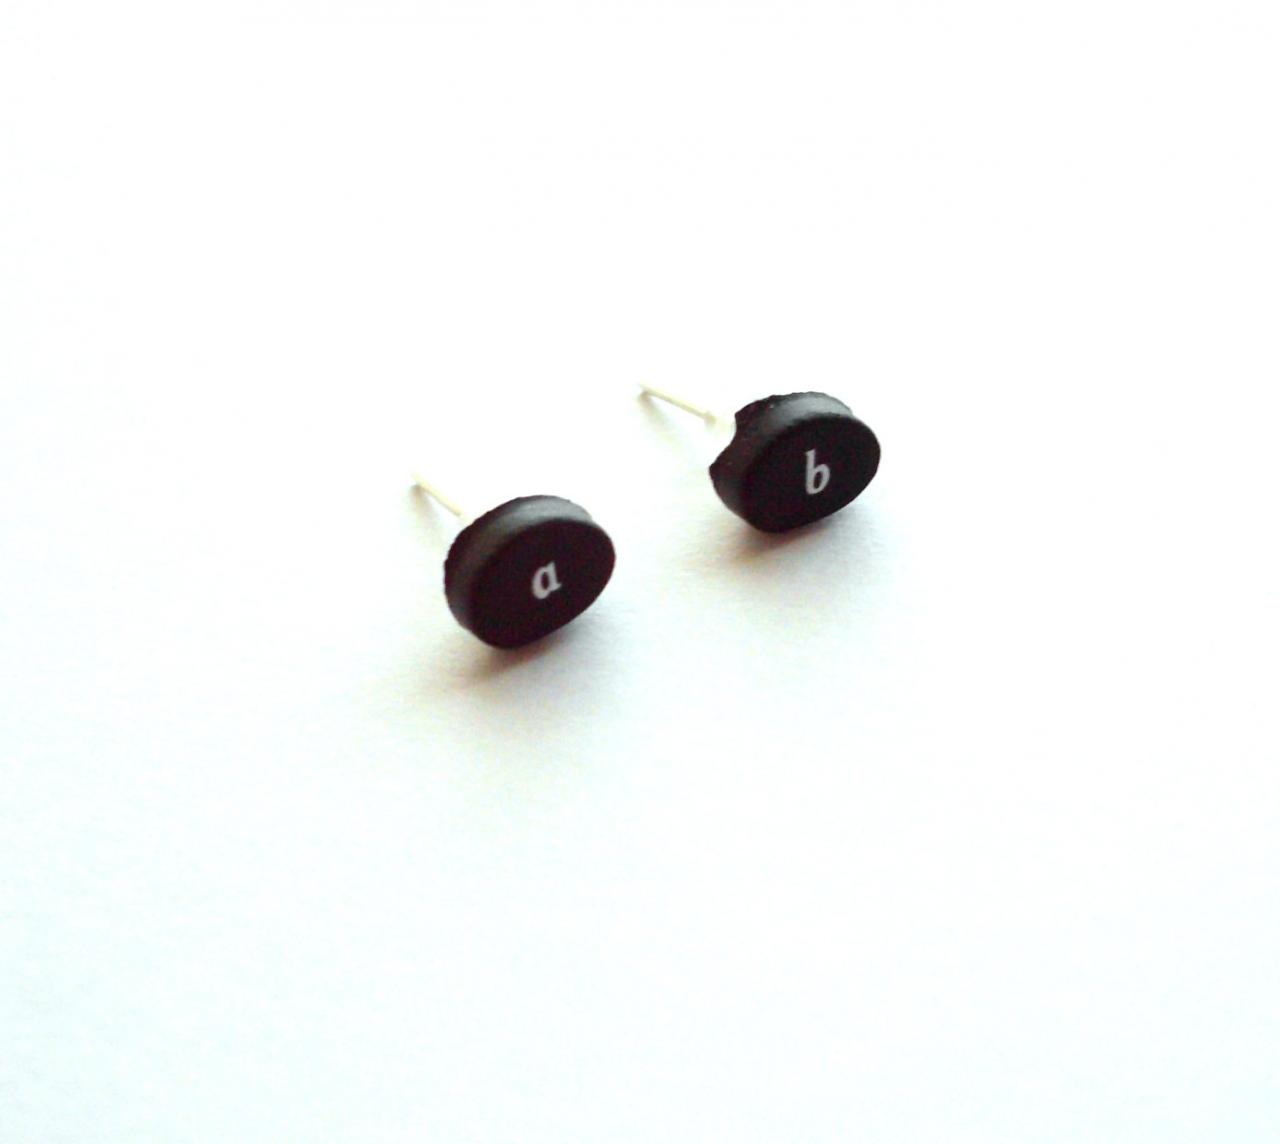 Minimalist Earrings Science Jewelry Made Of Repurposed Calculator Keys Black Ear Studs Recycled Jewelry Geek Earrings For Men